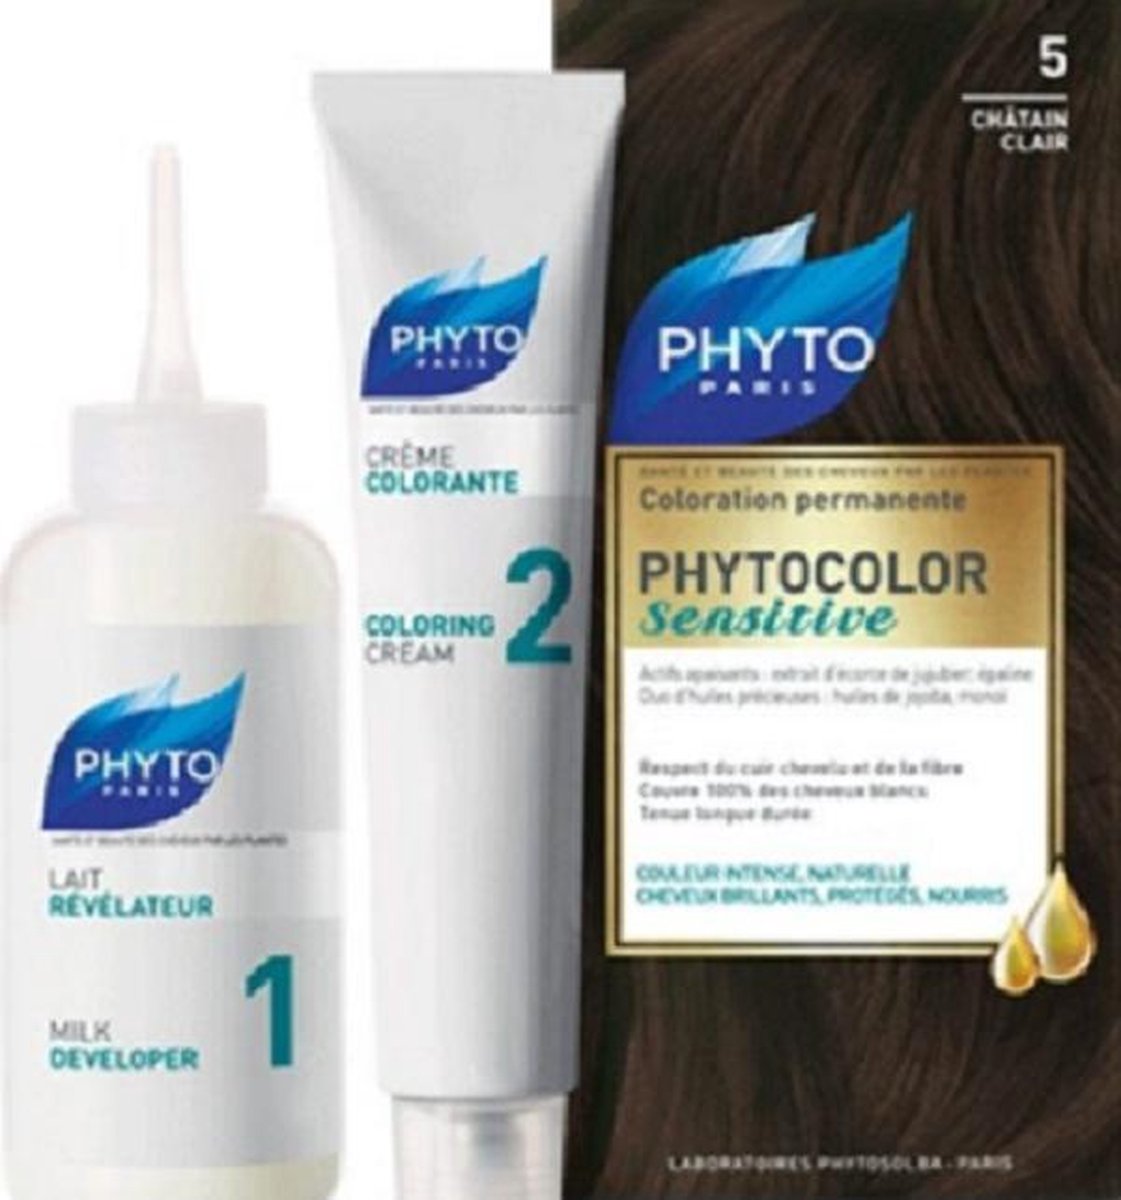 Phyto Phytocolor Sensitive Haarkleuring 5 Licht Kastanjebruin - 1 pakket